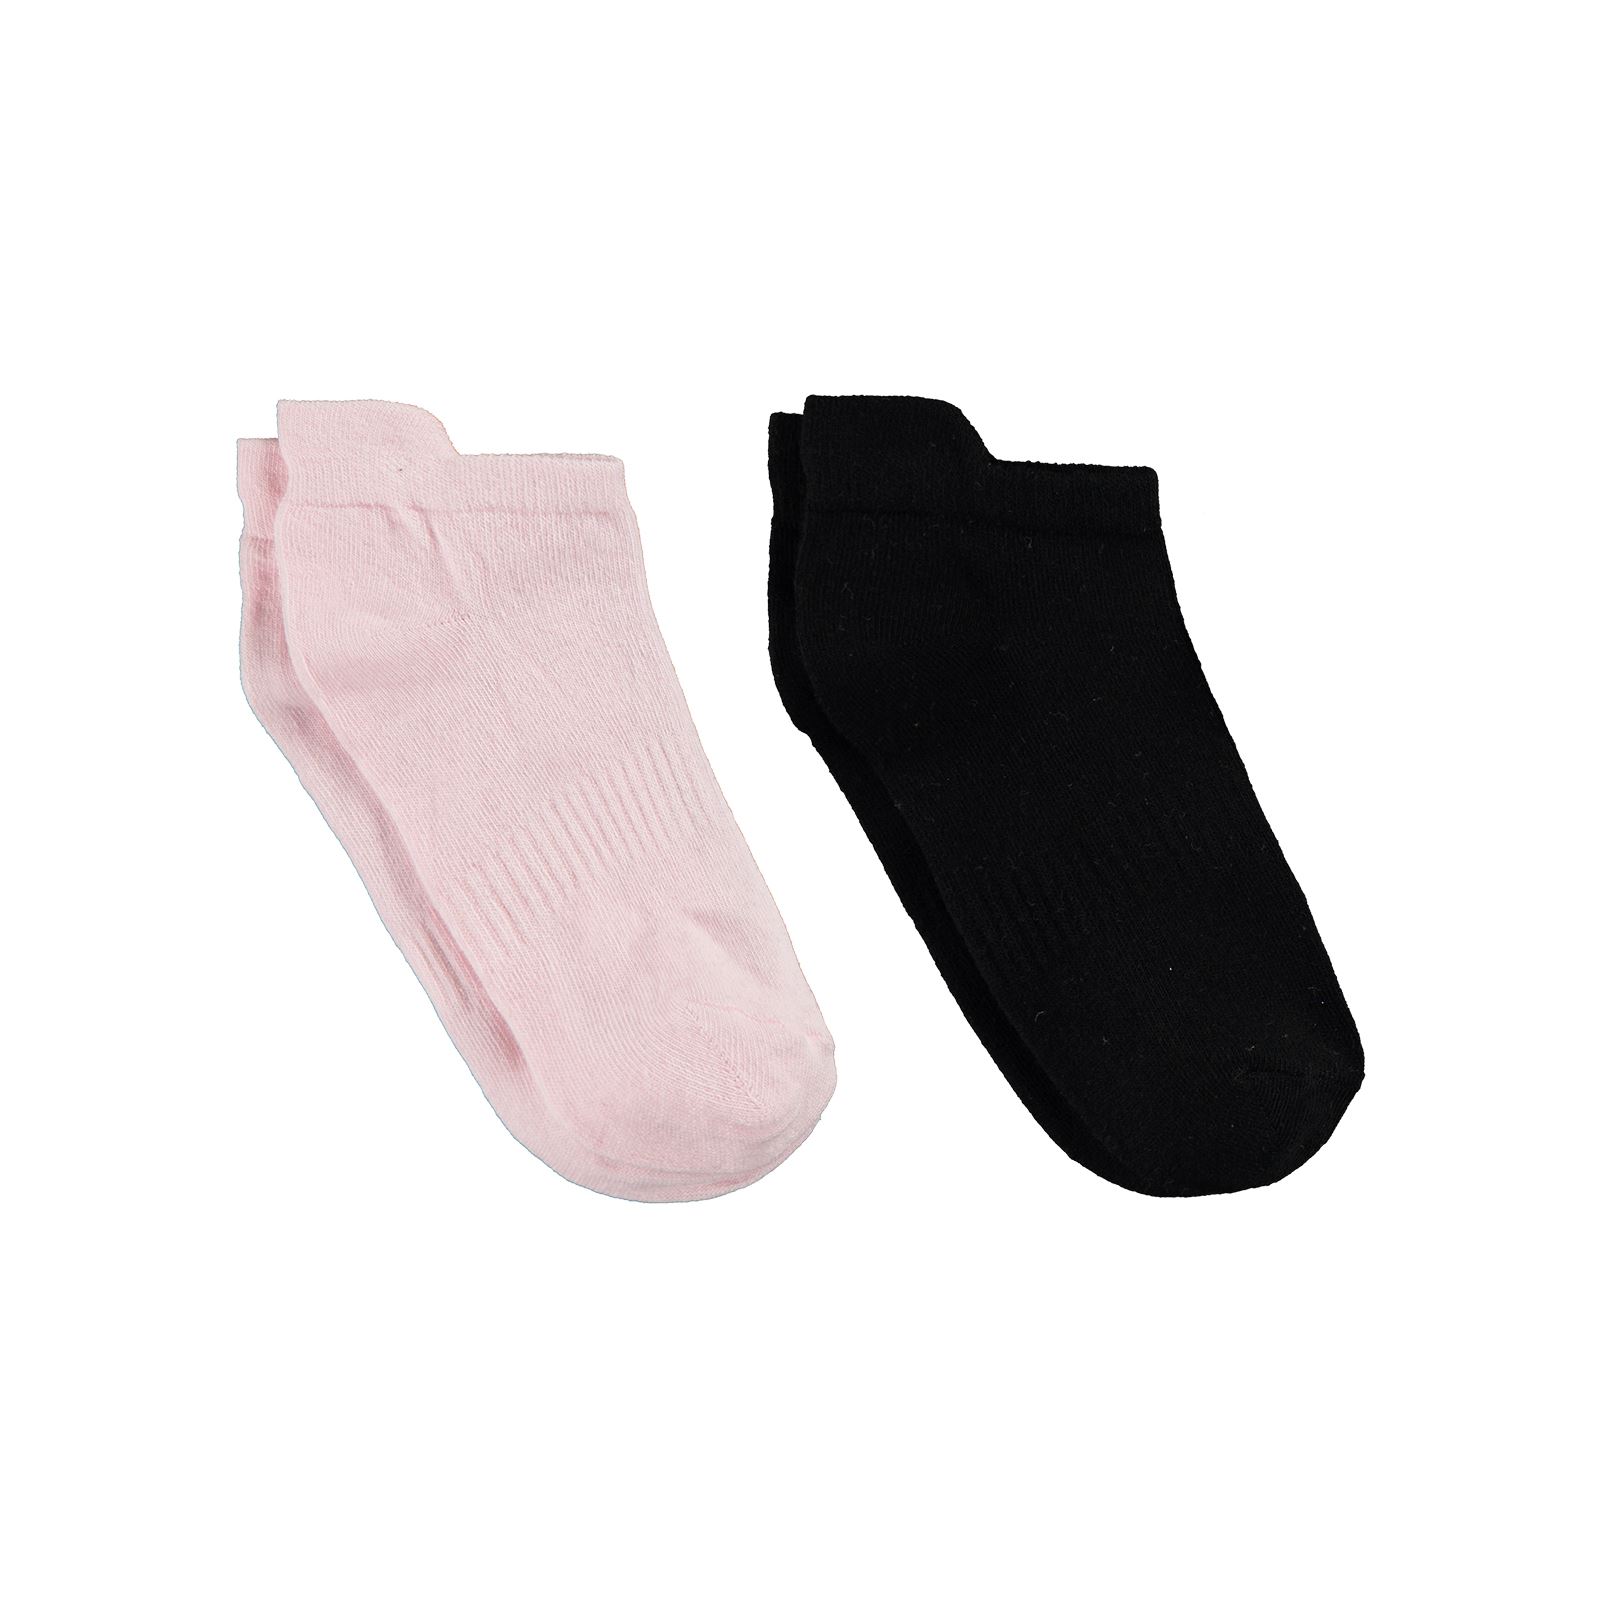 Gzn Kadın 2'li Dikişsiz Patik Çorap 36-40 Numara Pembe-Siyah